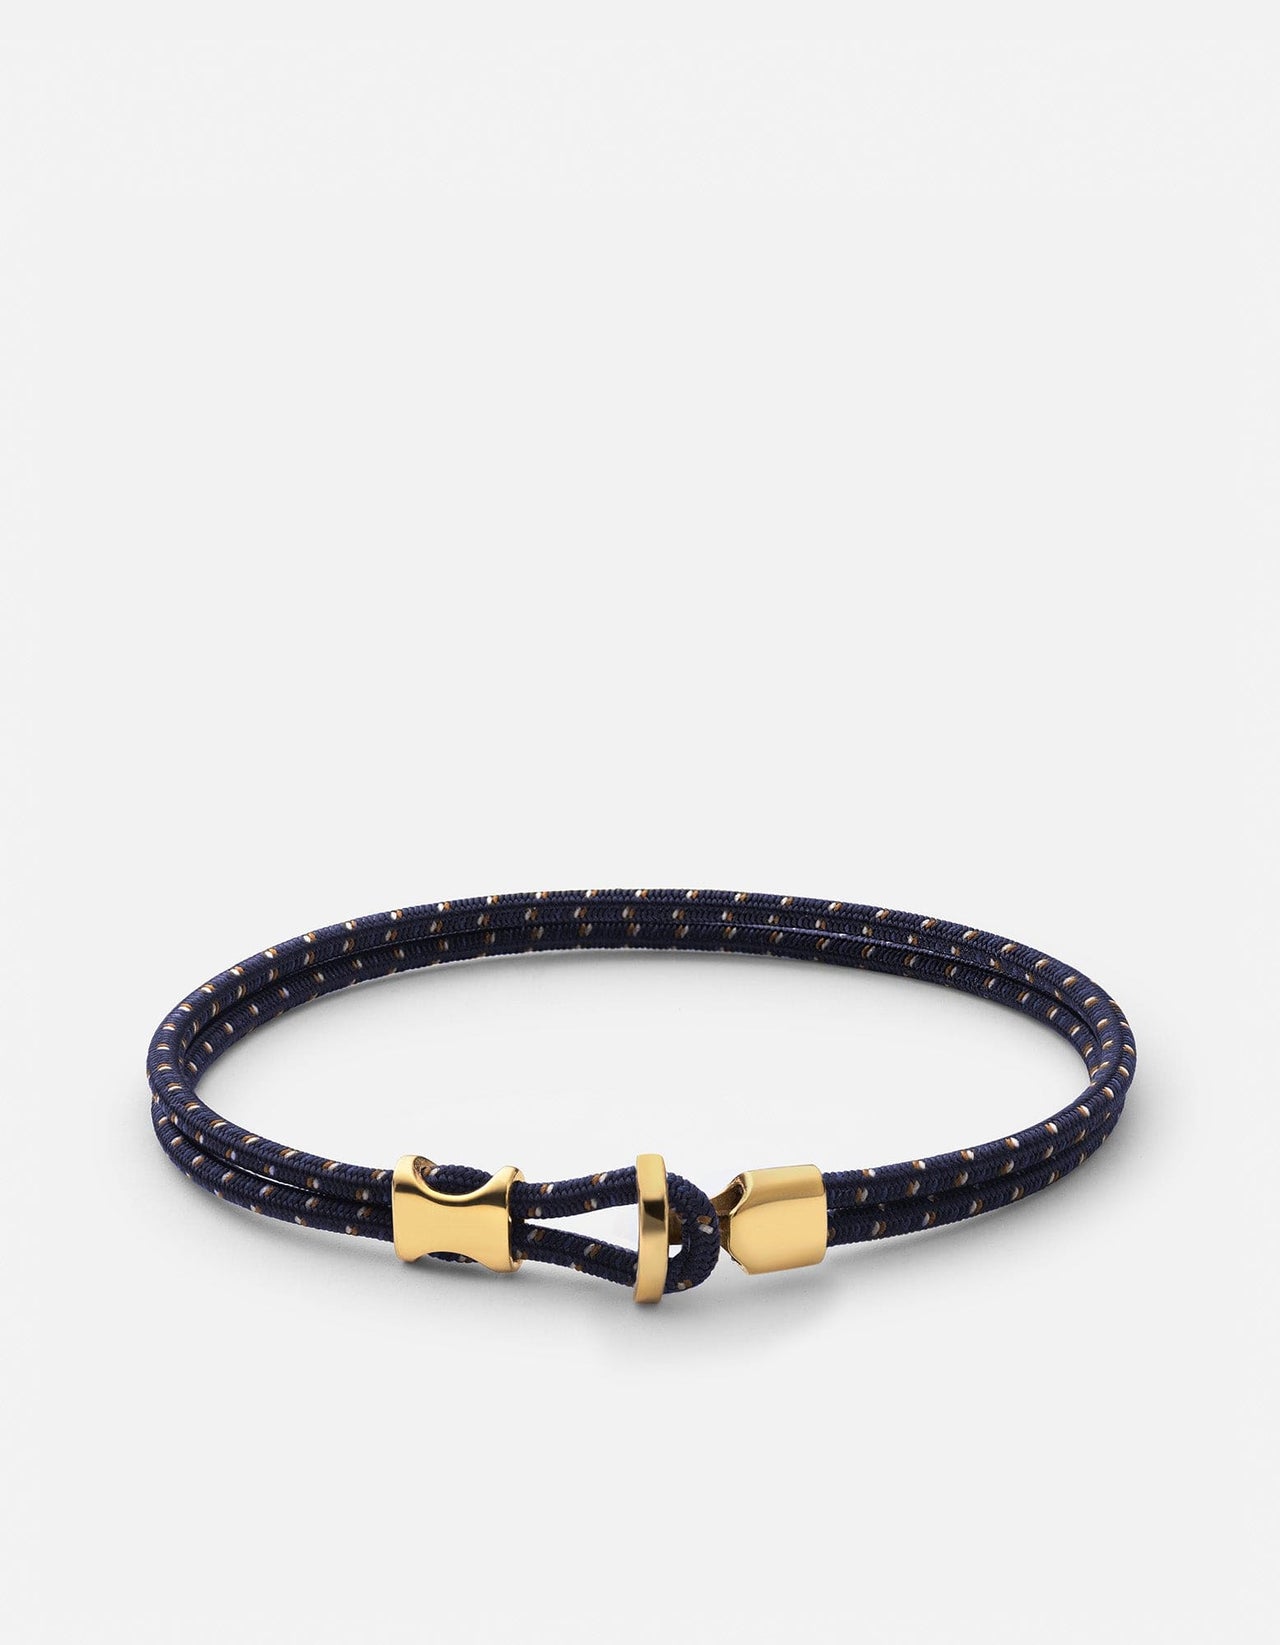 Men Women Braided Leather Bracelets Woven Ethnic Tribal Rope Wristbands  Bracelet | eBay